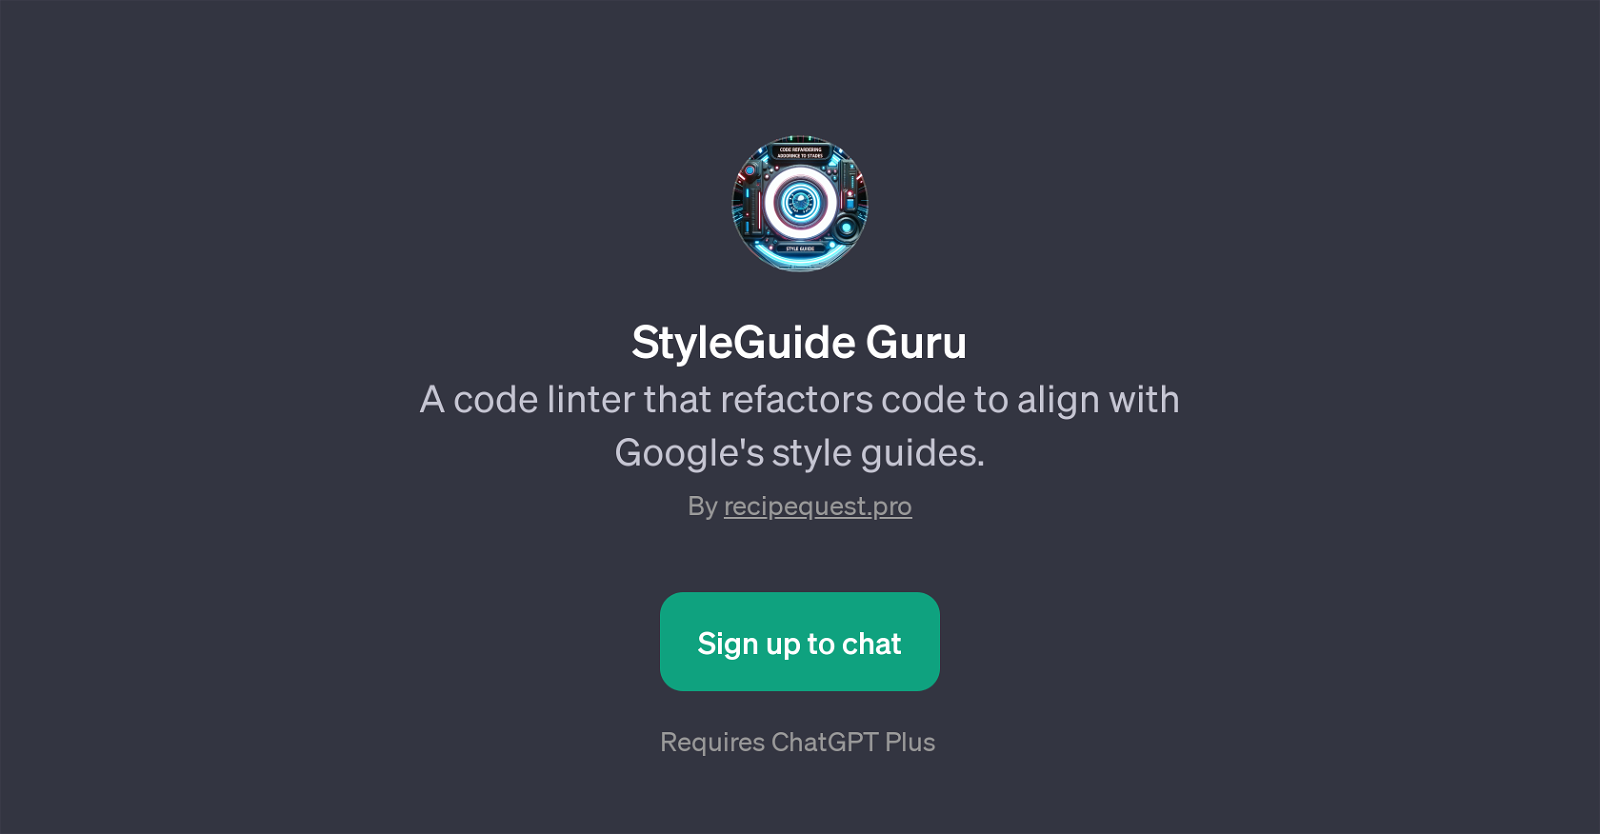 StyleGuide Guru website